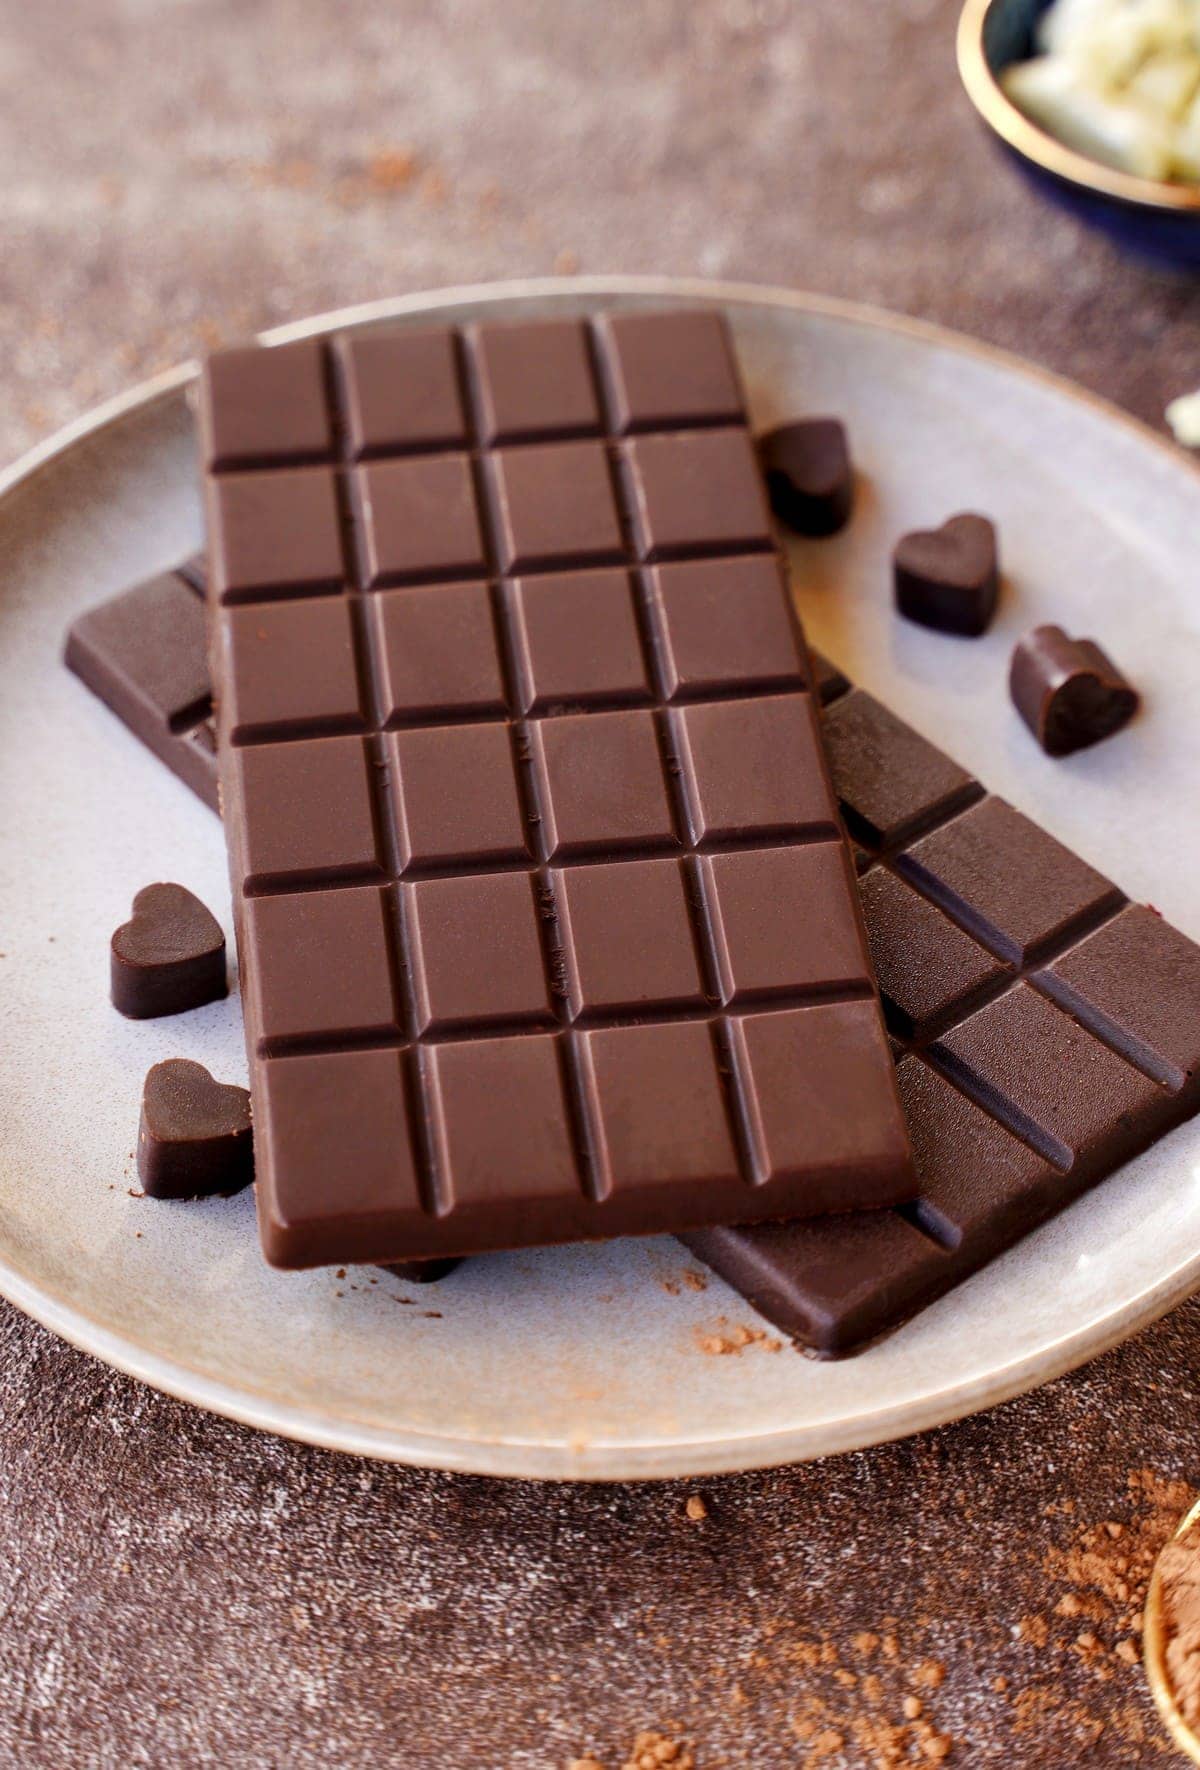 How To Make Chocolate (3 Ingredients) - Elavegan